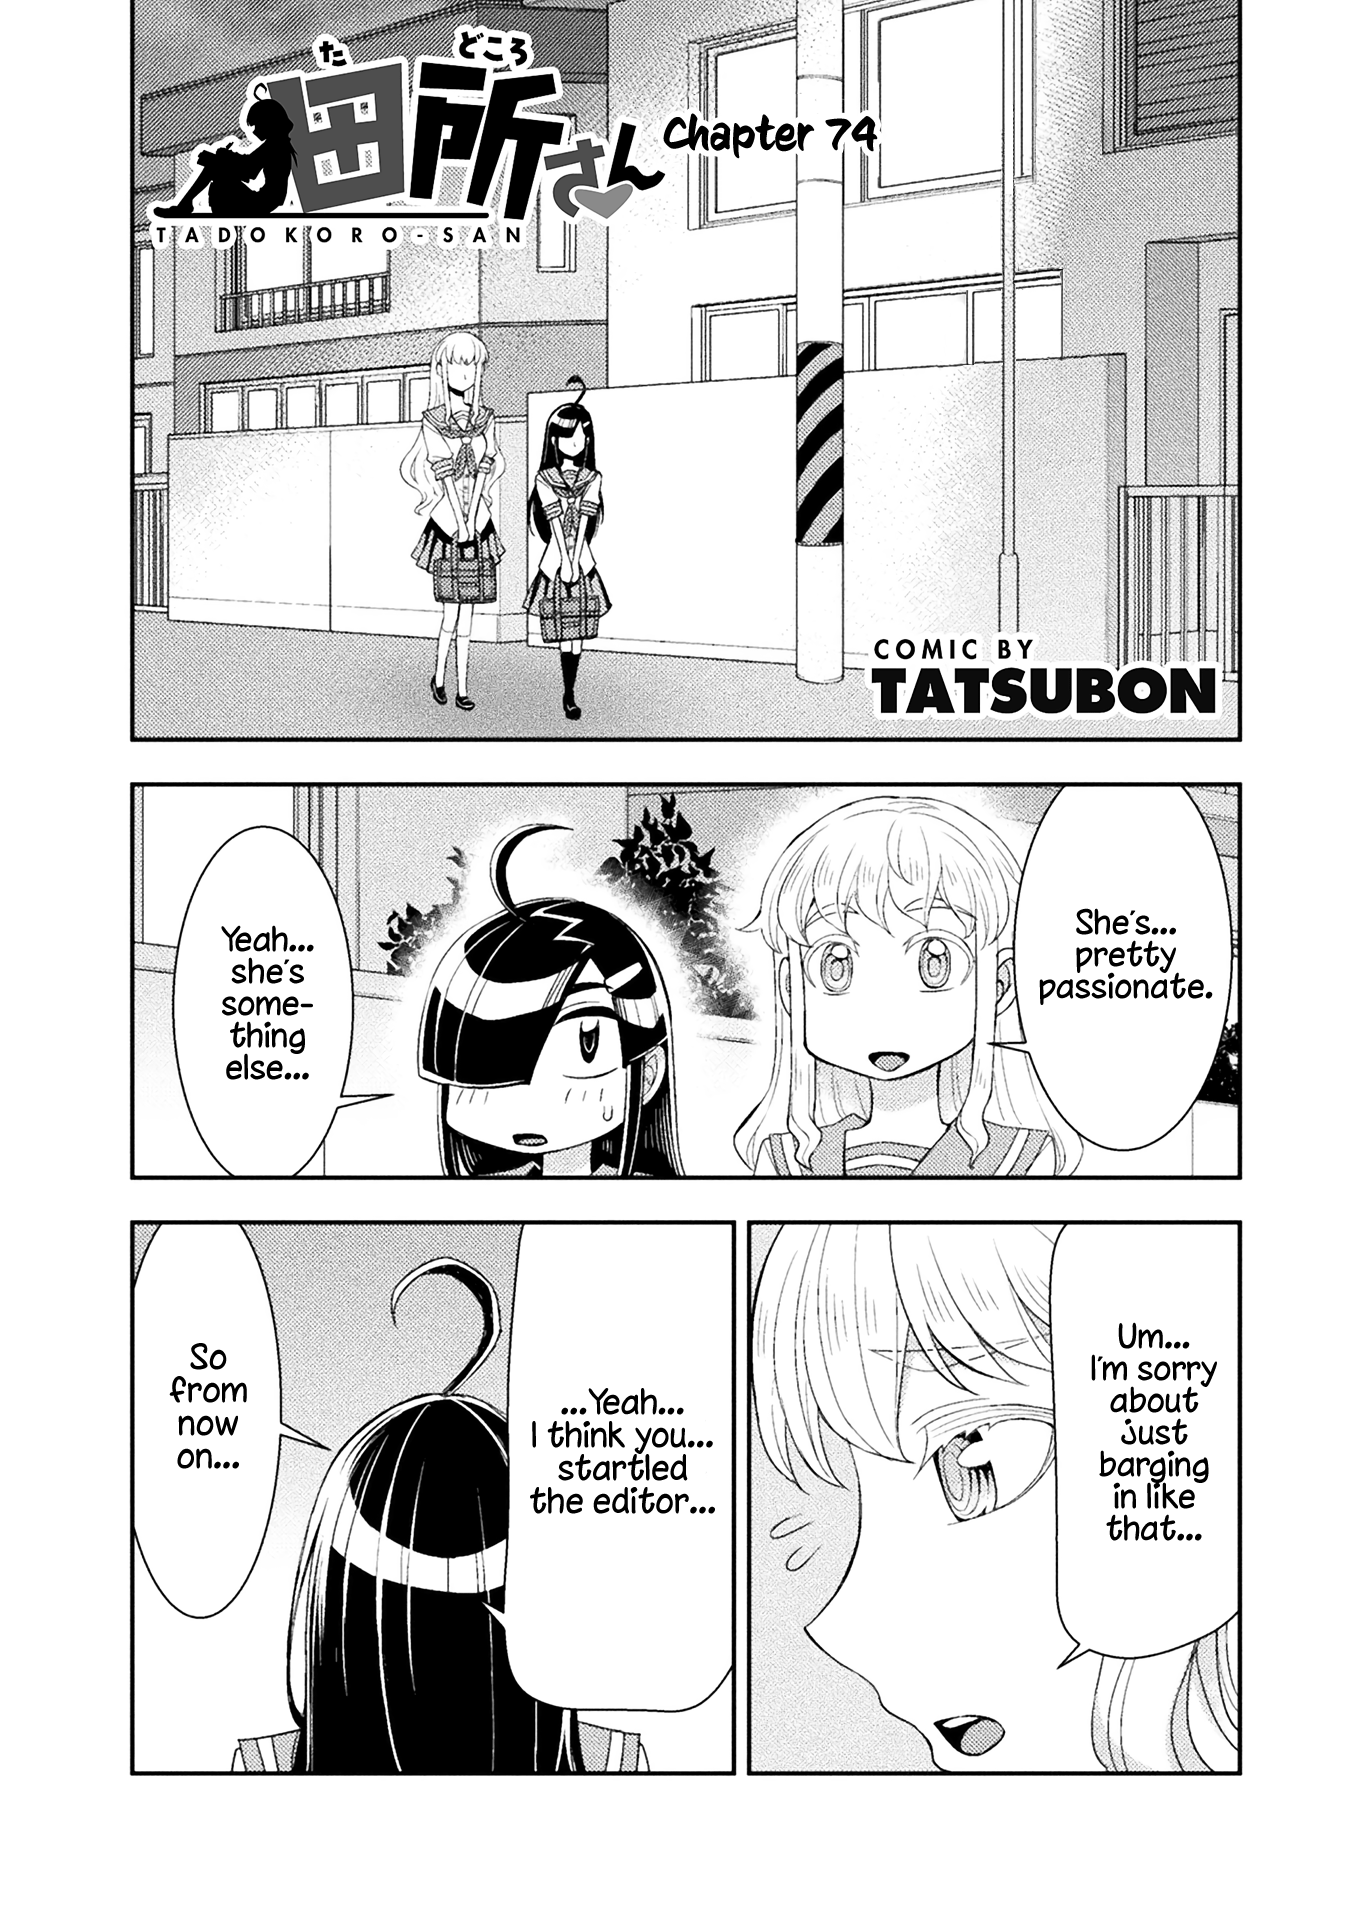 Tadokoro-San (Tatsubon) - Page 1